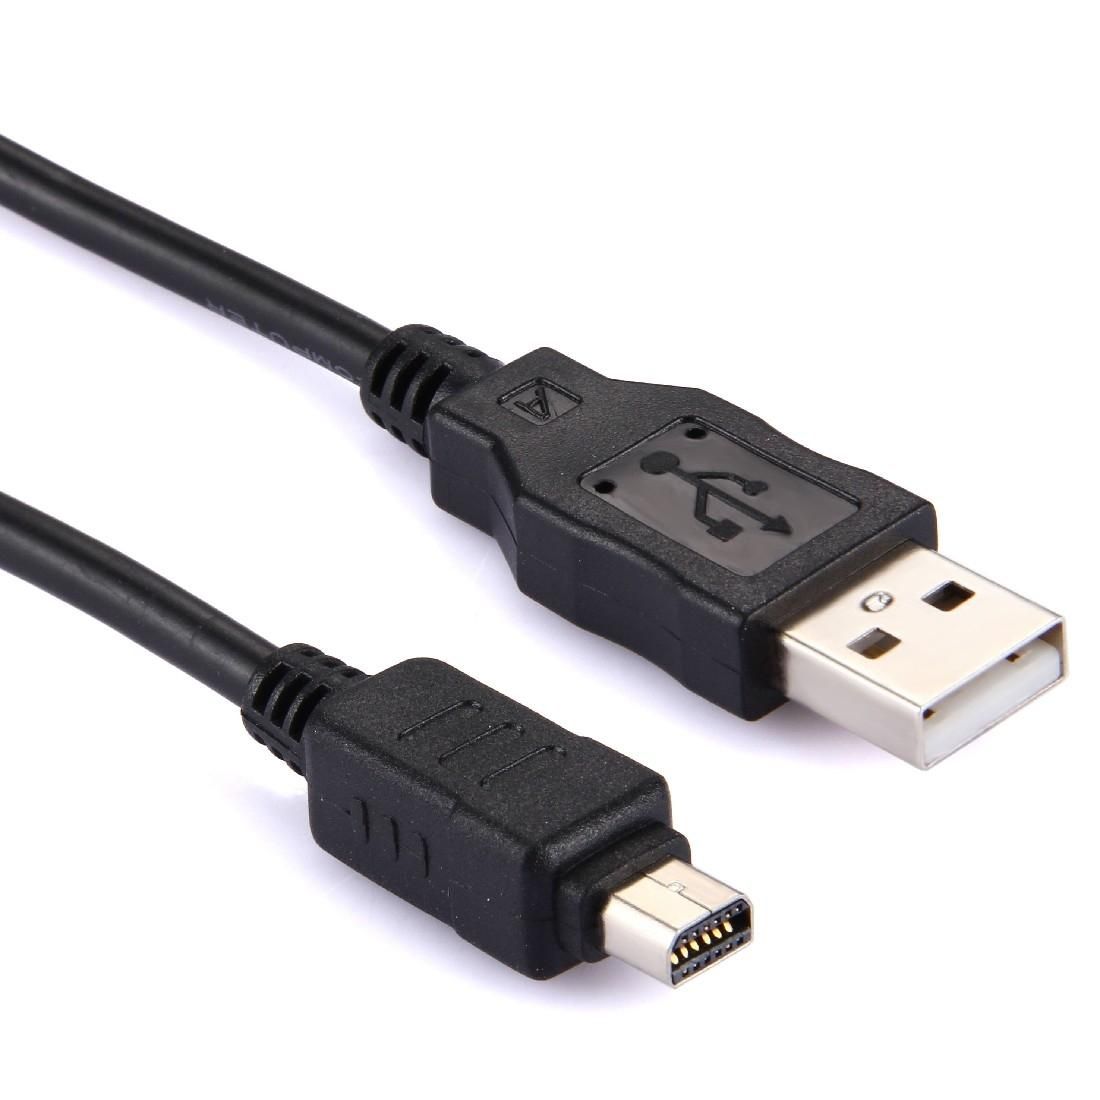 12 Pin Digital Camera USB Data Cable for Olympus FE140 / U830 / U840 / U850 / D425 / D435, Length: 1.5m (Black)